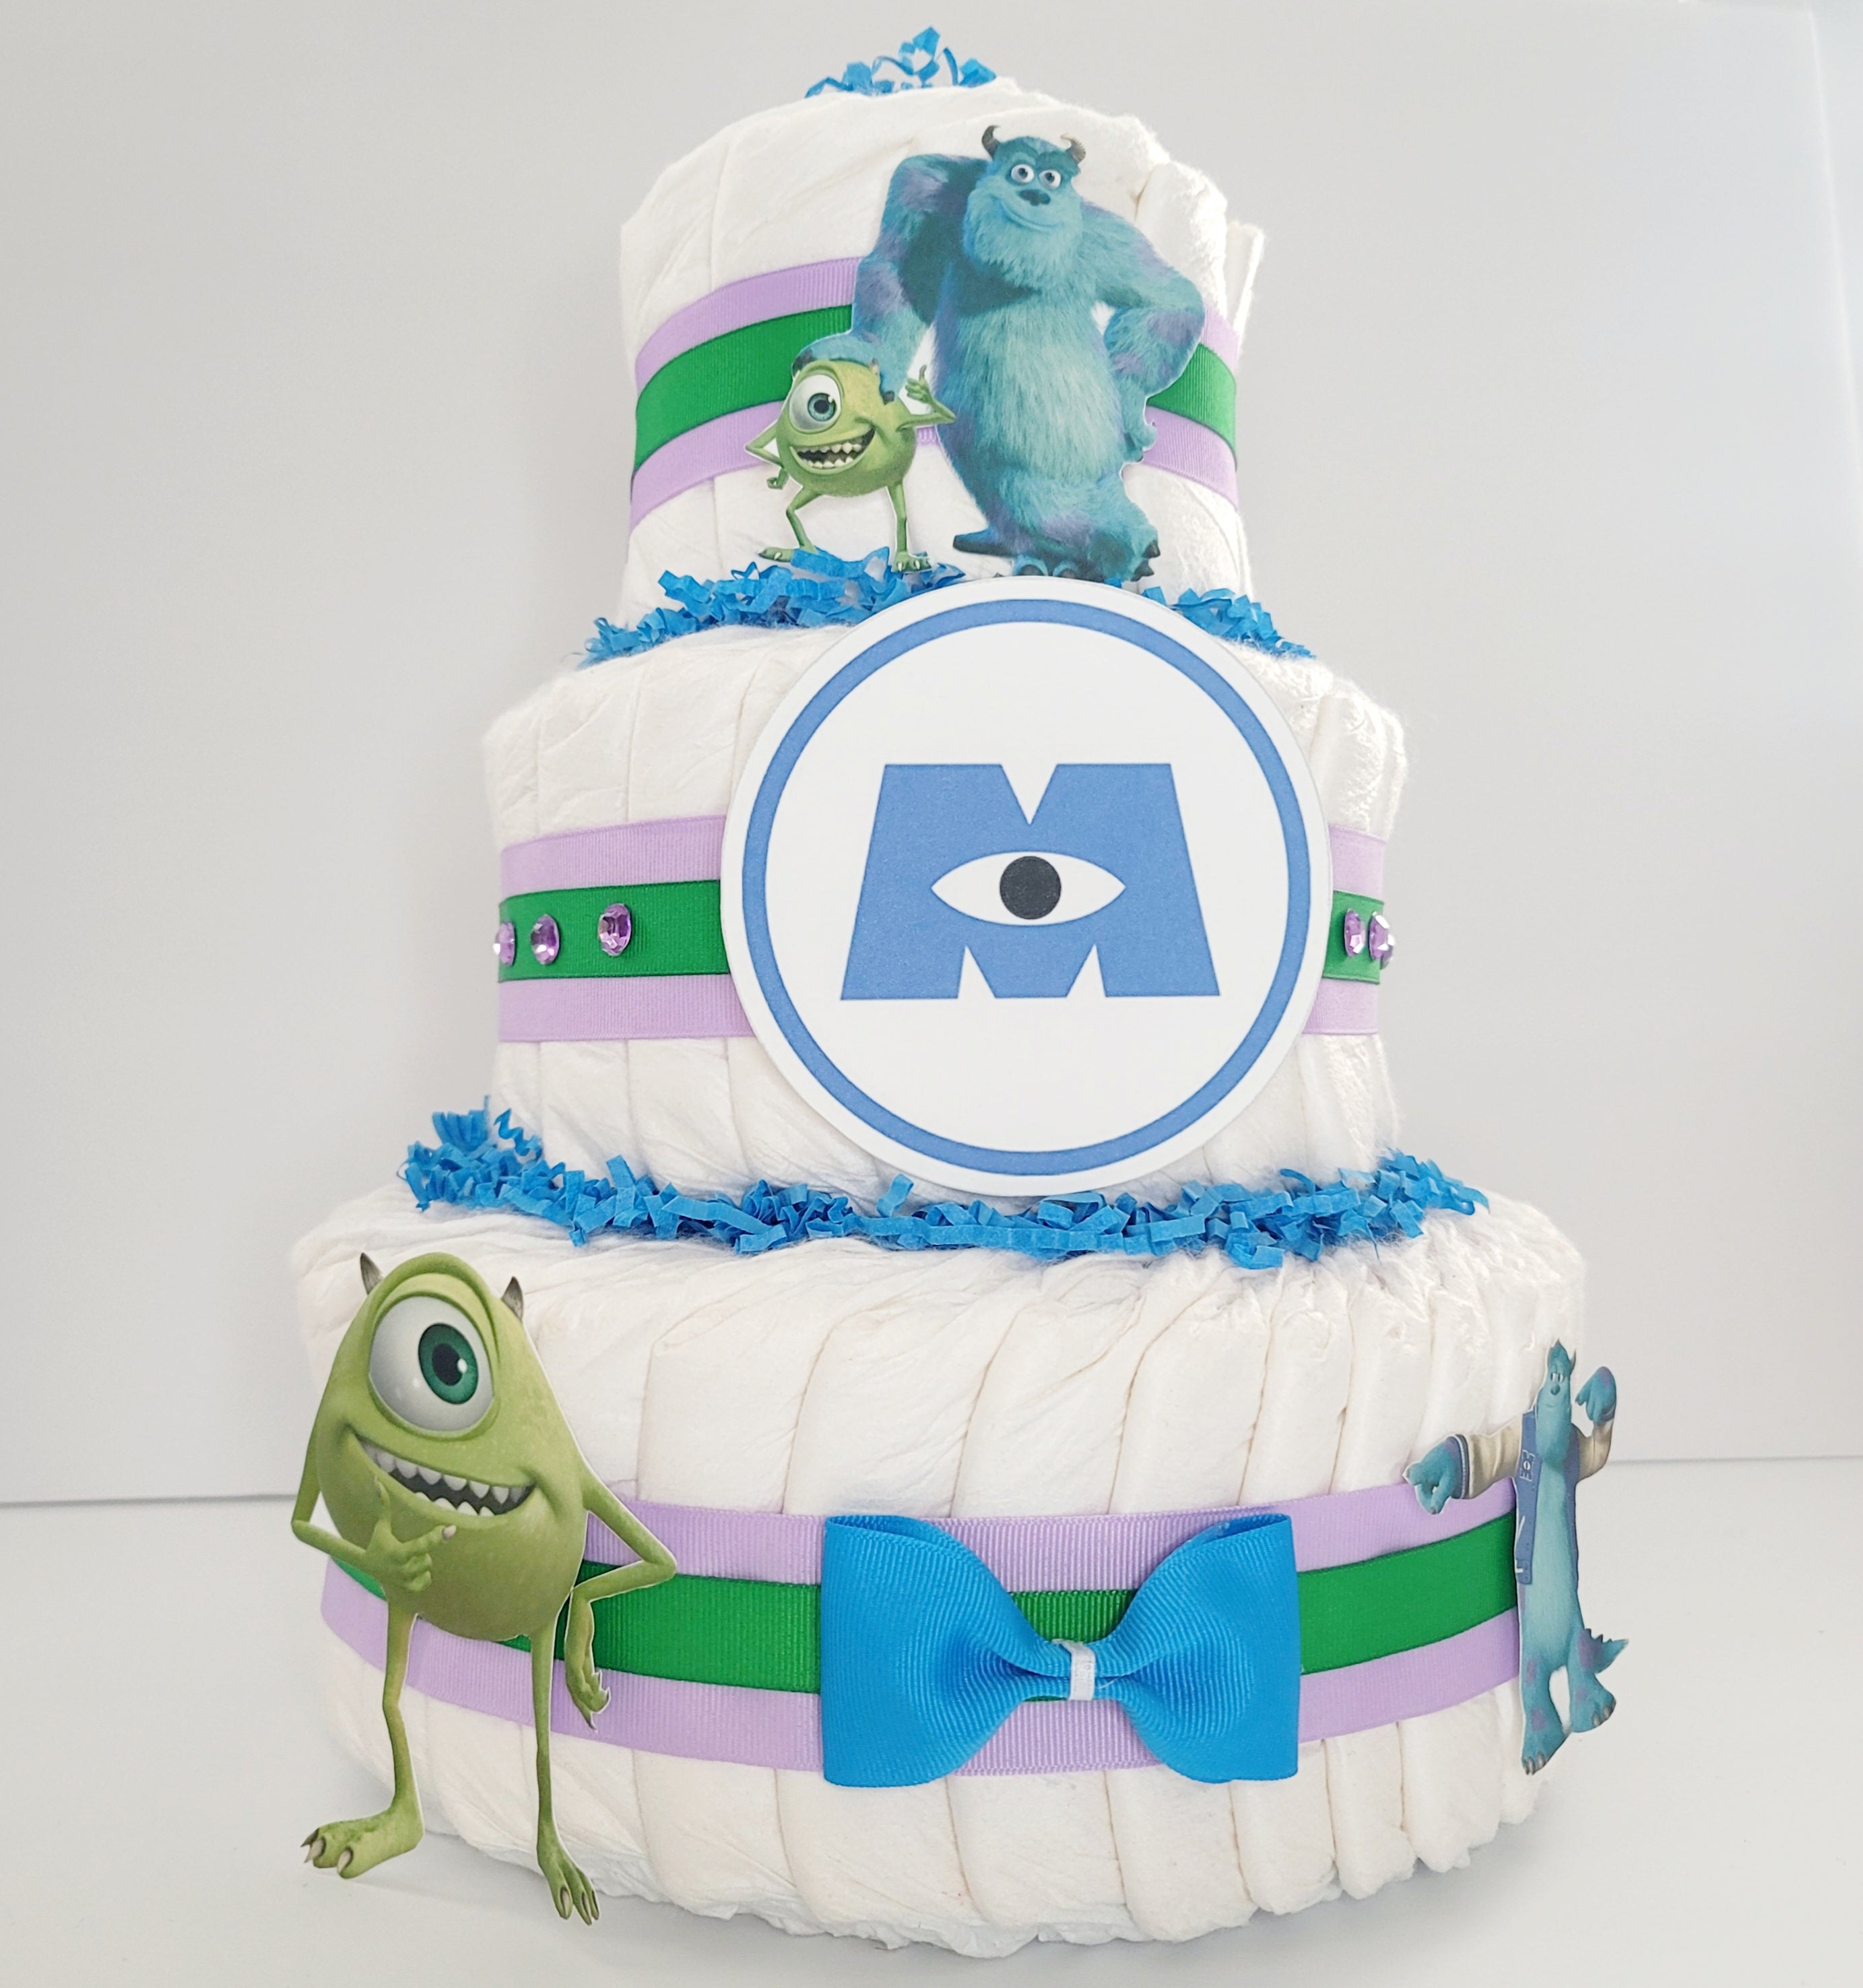 MONSTER INC. Edible Cake topper Party image | eBay